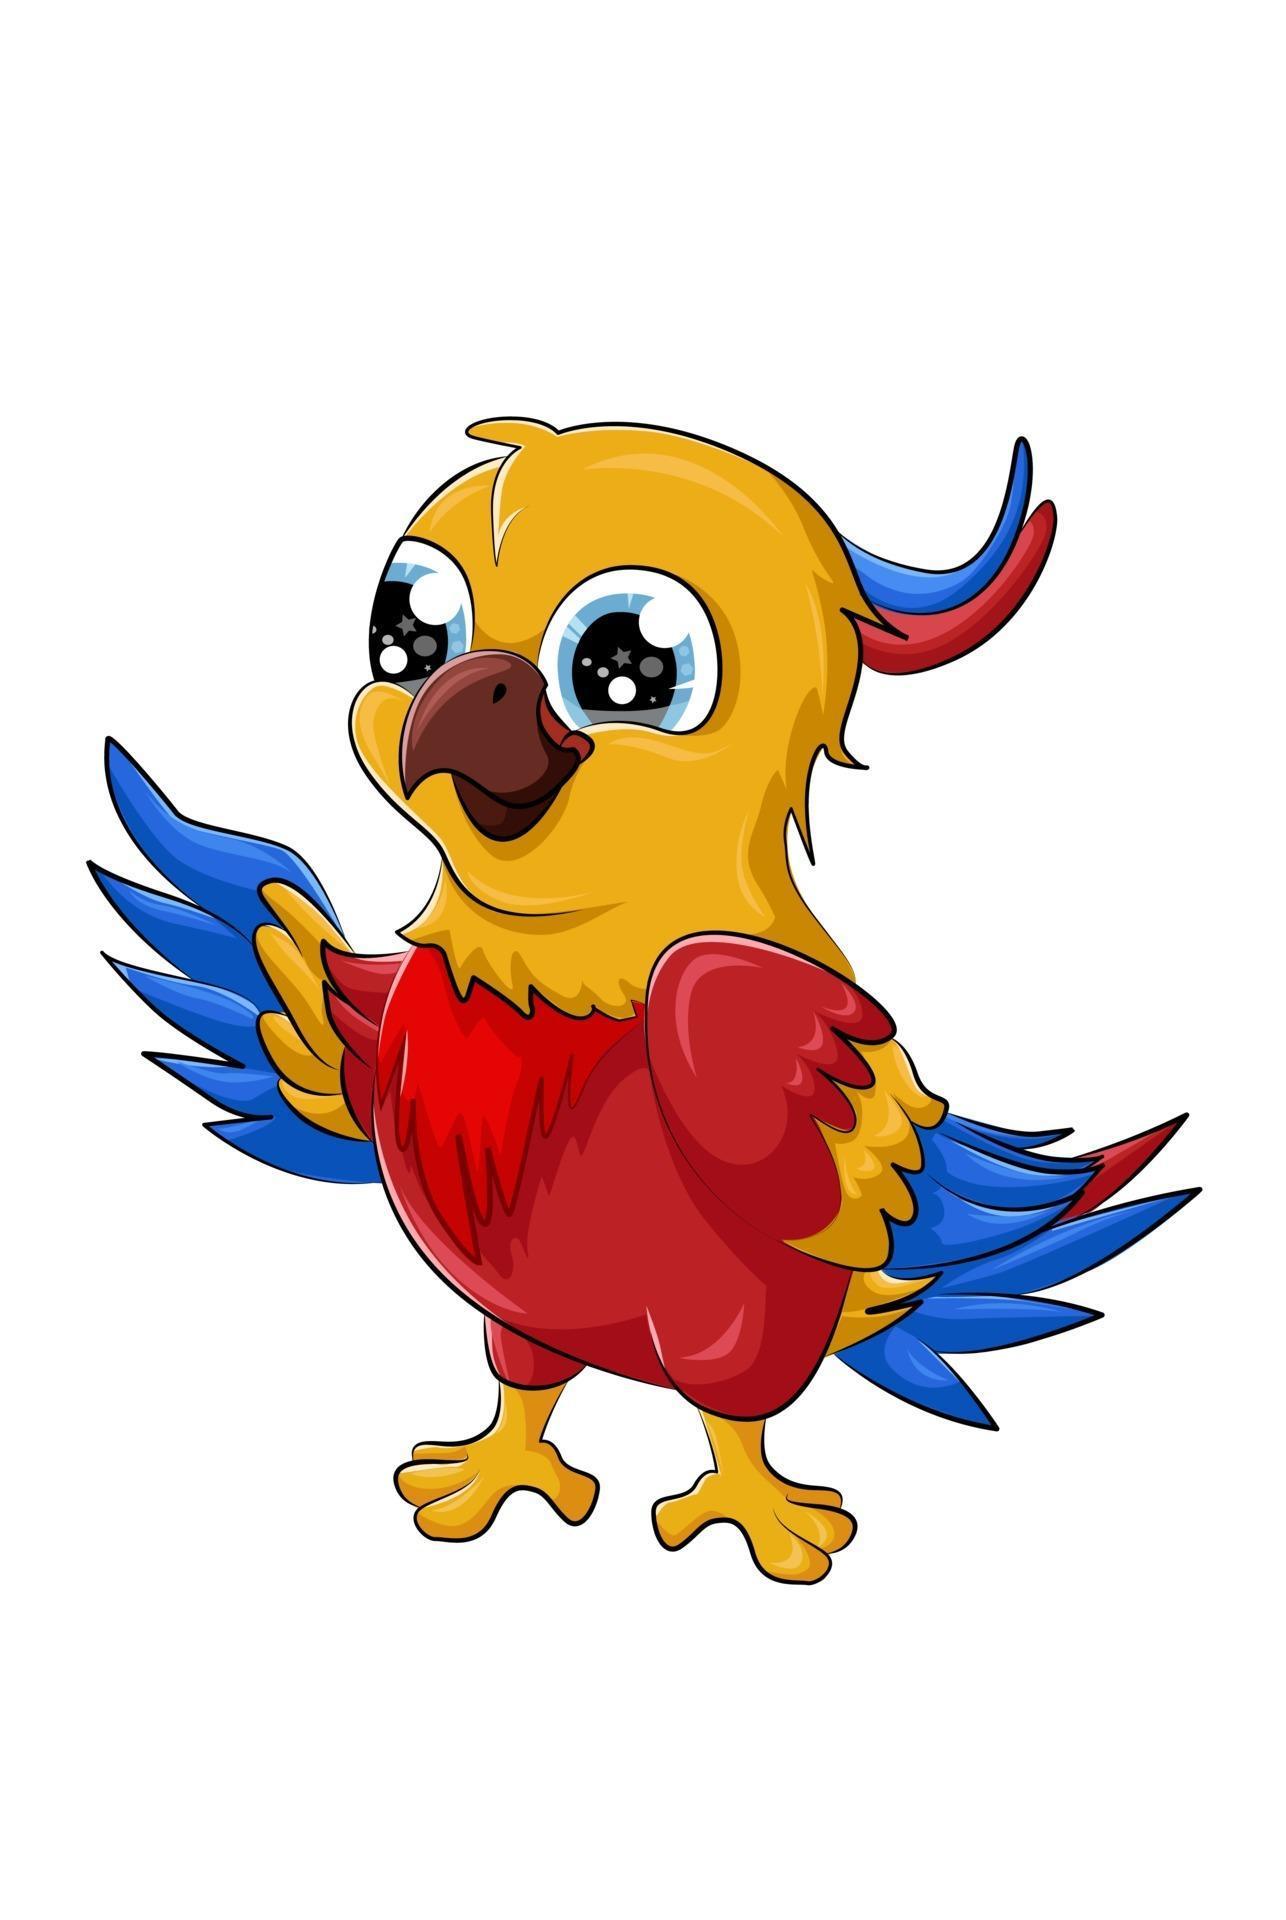 Parrot Cartoon Images : Cartoon Parrot Stock Images, Royalty-free ...